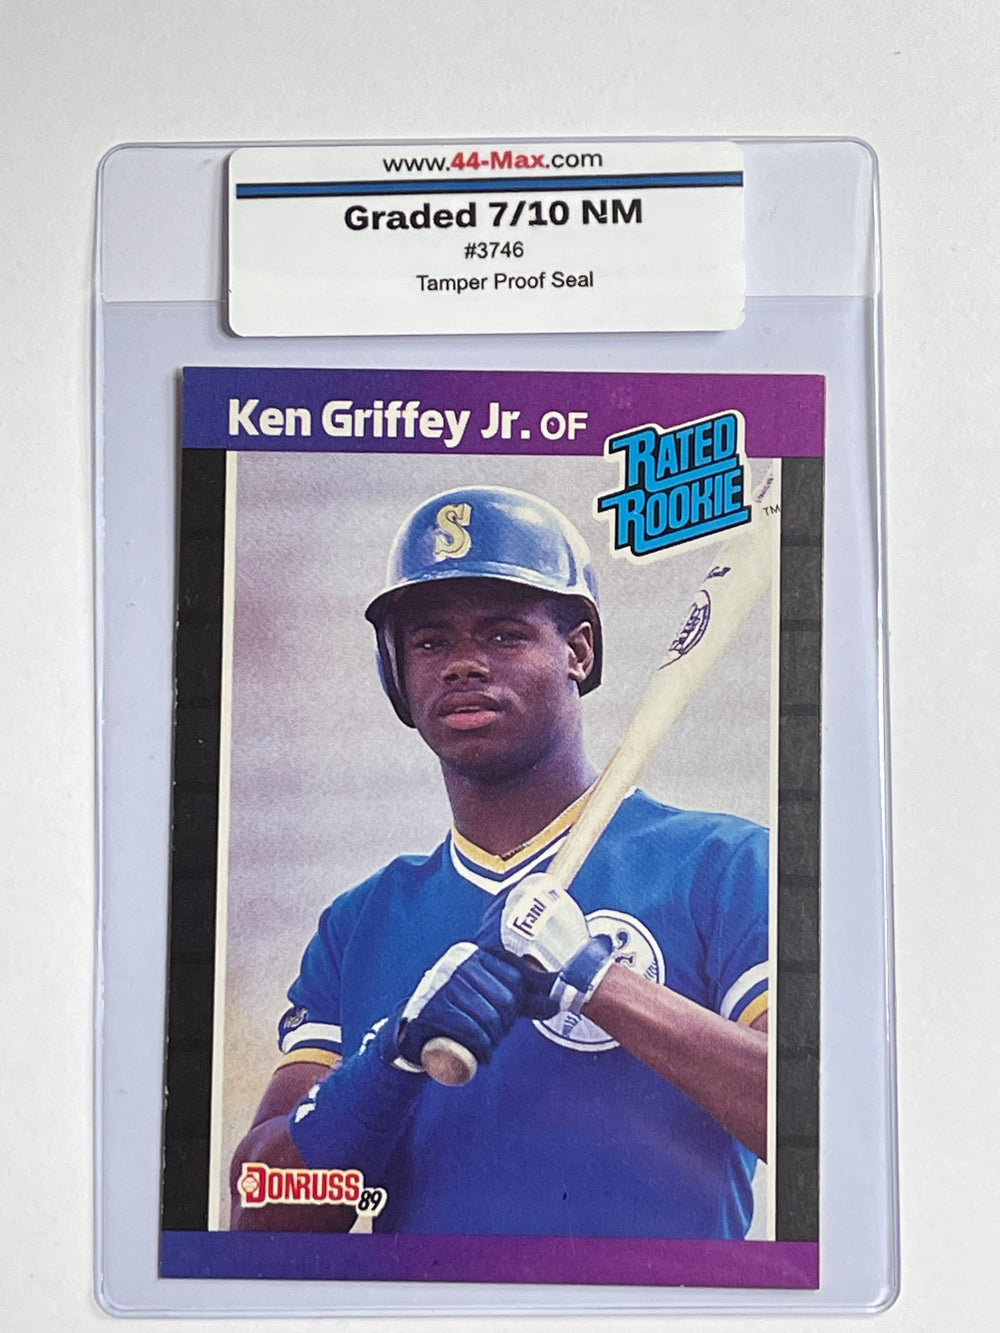 Ken Griffey Jr 1991 Donruss Mariners #33 Card. 44-Max 7/10 NM #3746